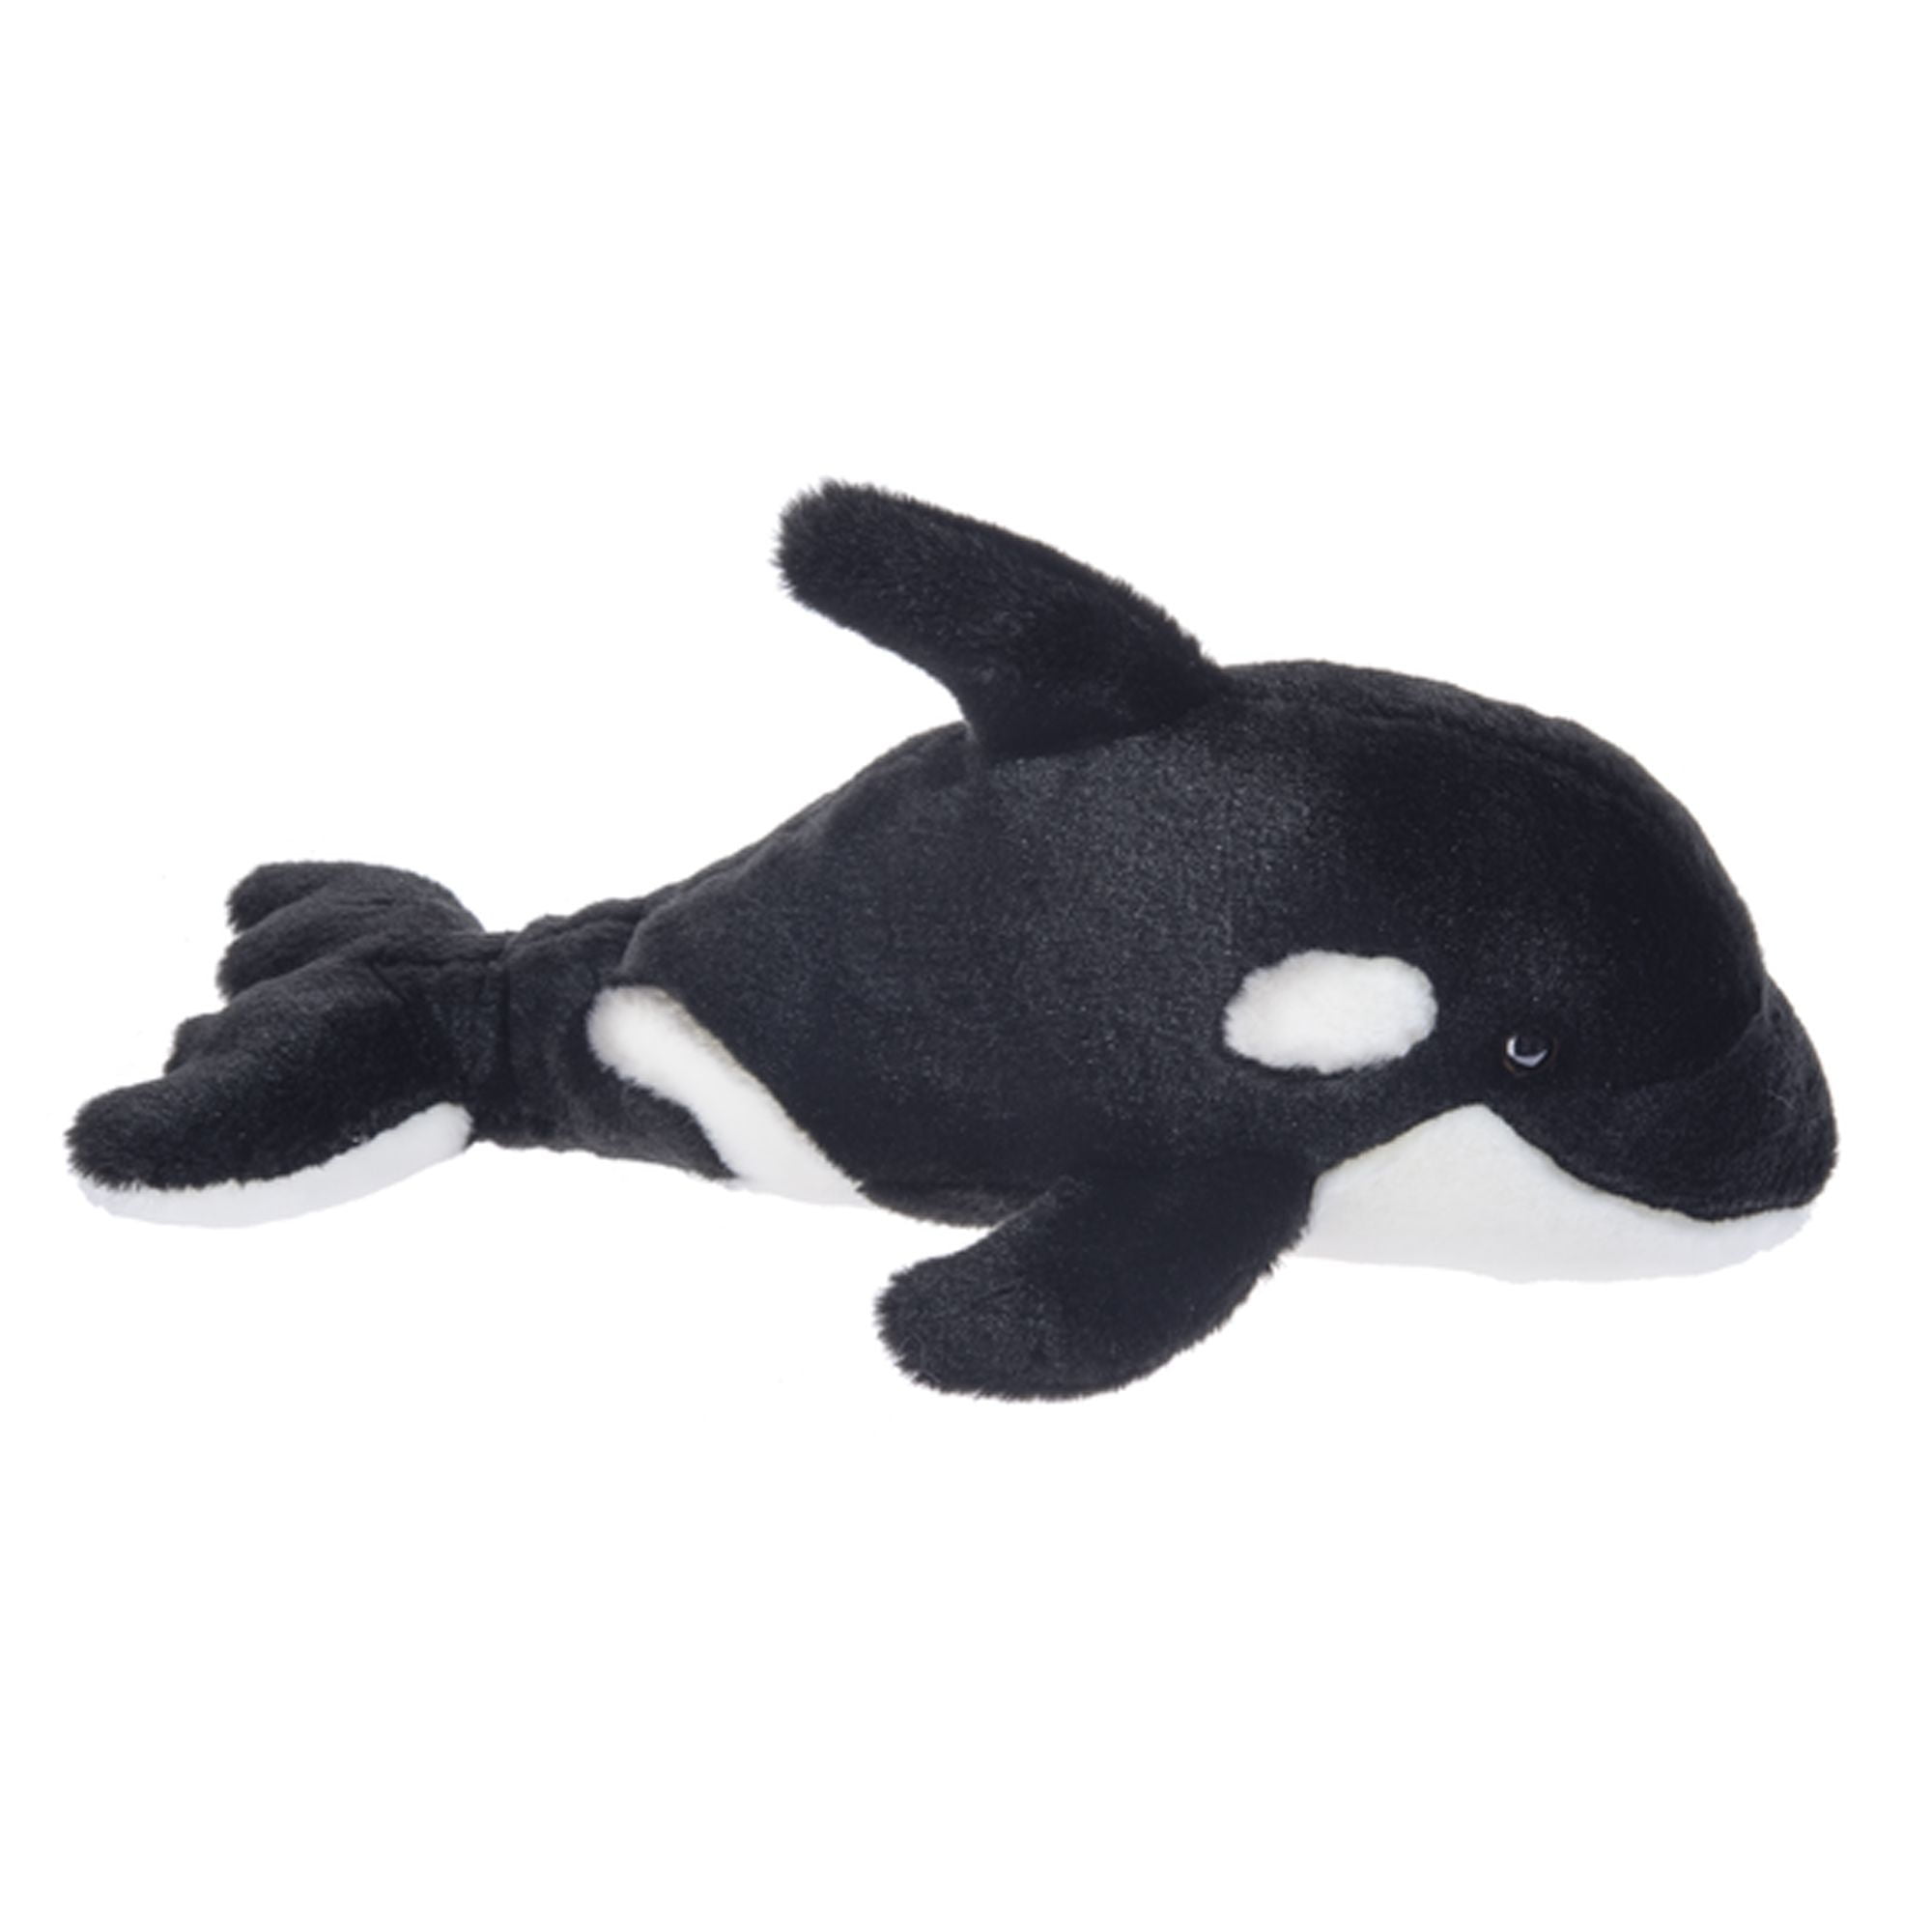 orca whale stuffed animal